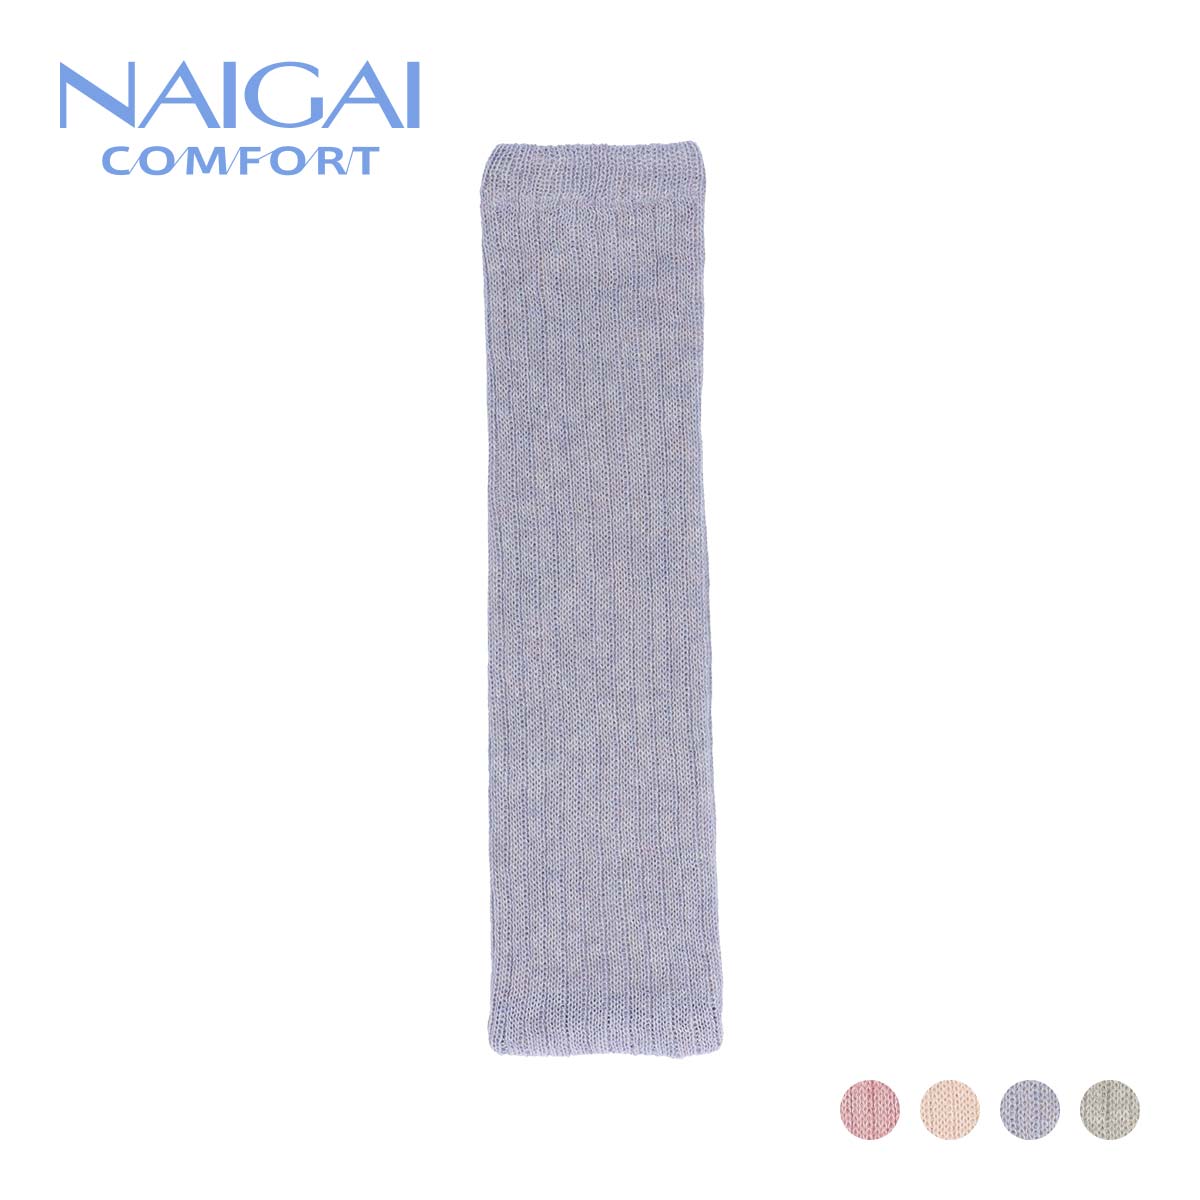 NAIGAI COMFORT ナイガイ コンフォート 肌側シルク 2重編み 綿混メランジ レッグウォーマー